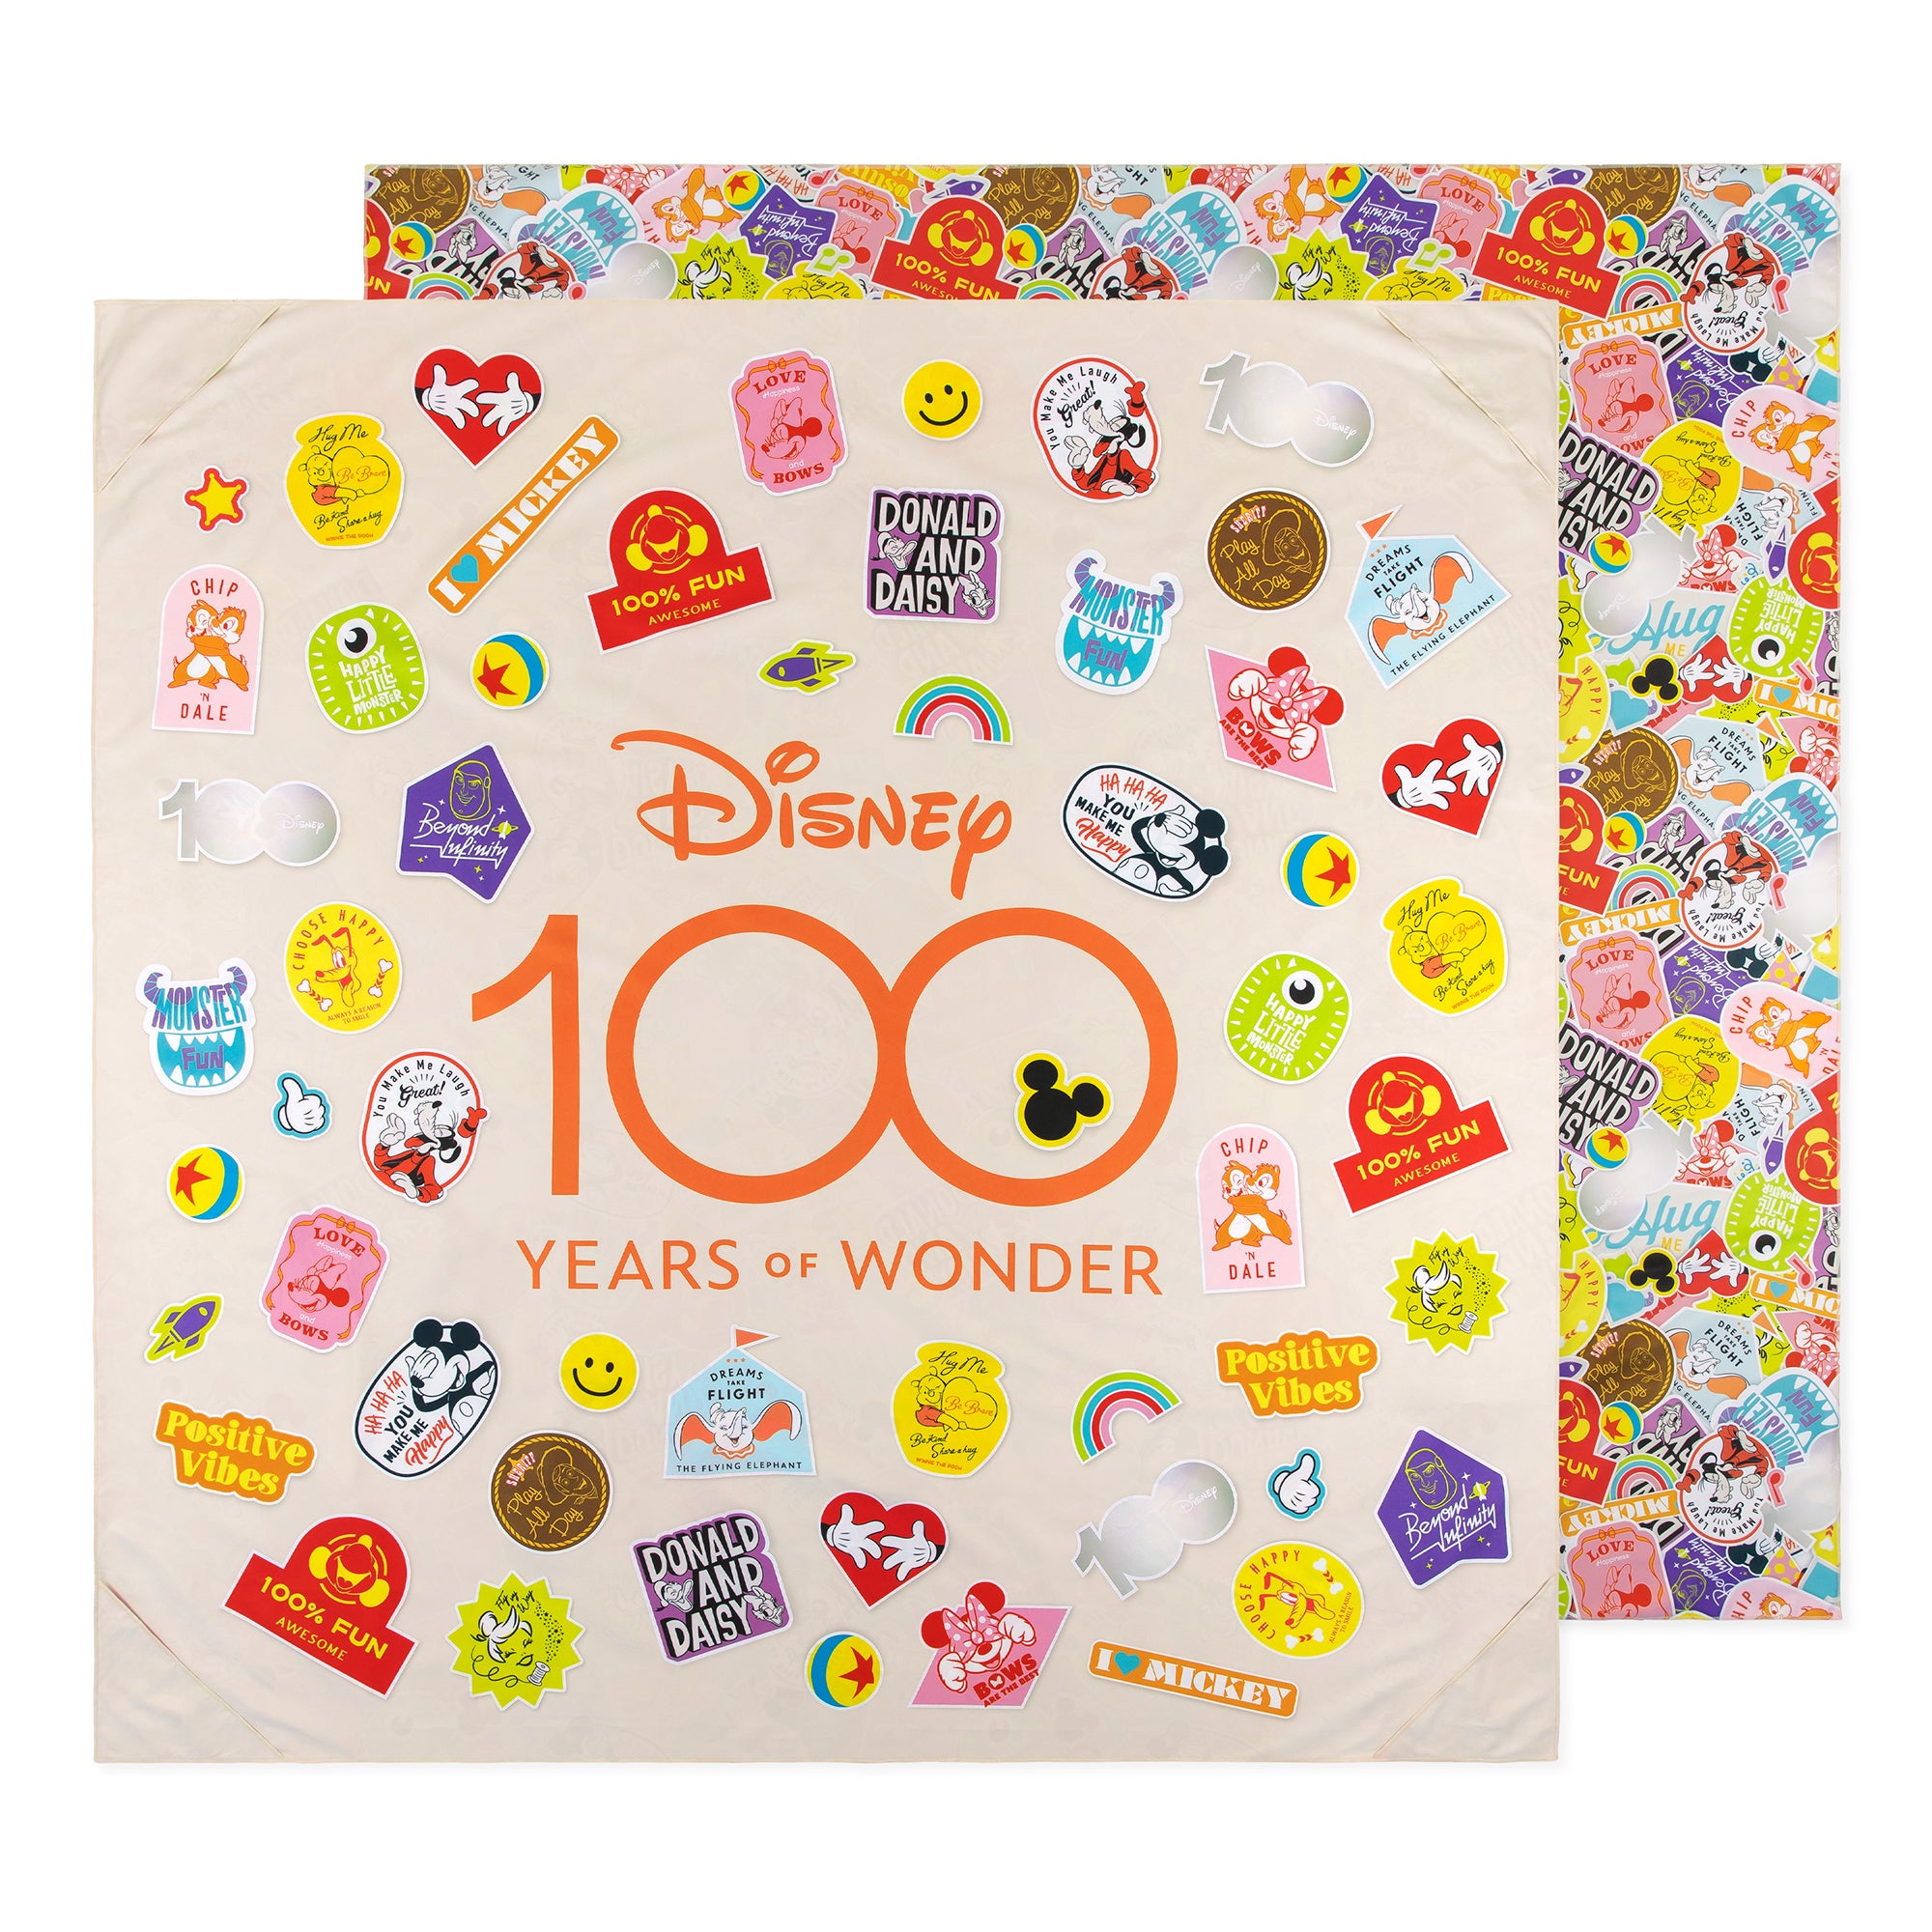 16 Disney ideas  disney, disney board games, disney cross stitch kits